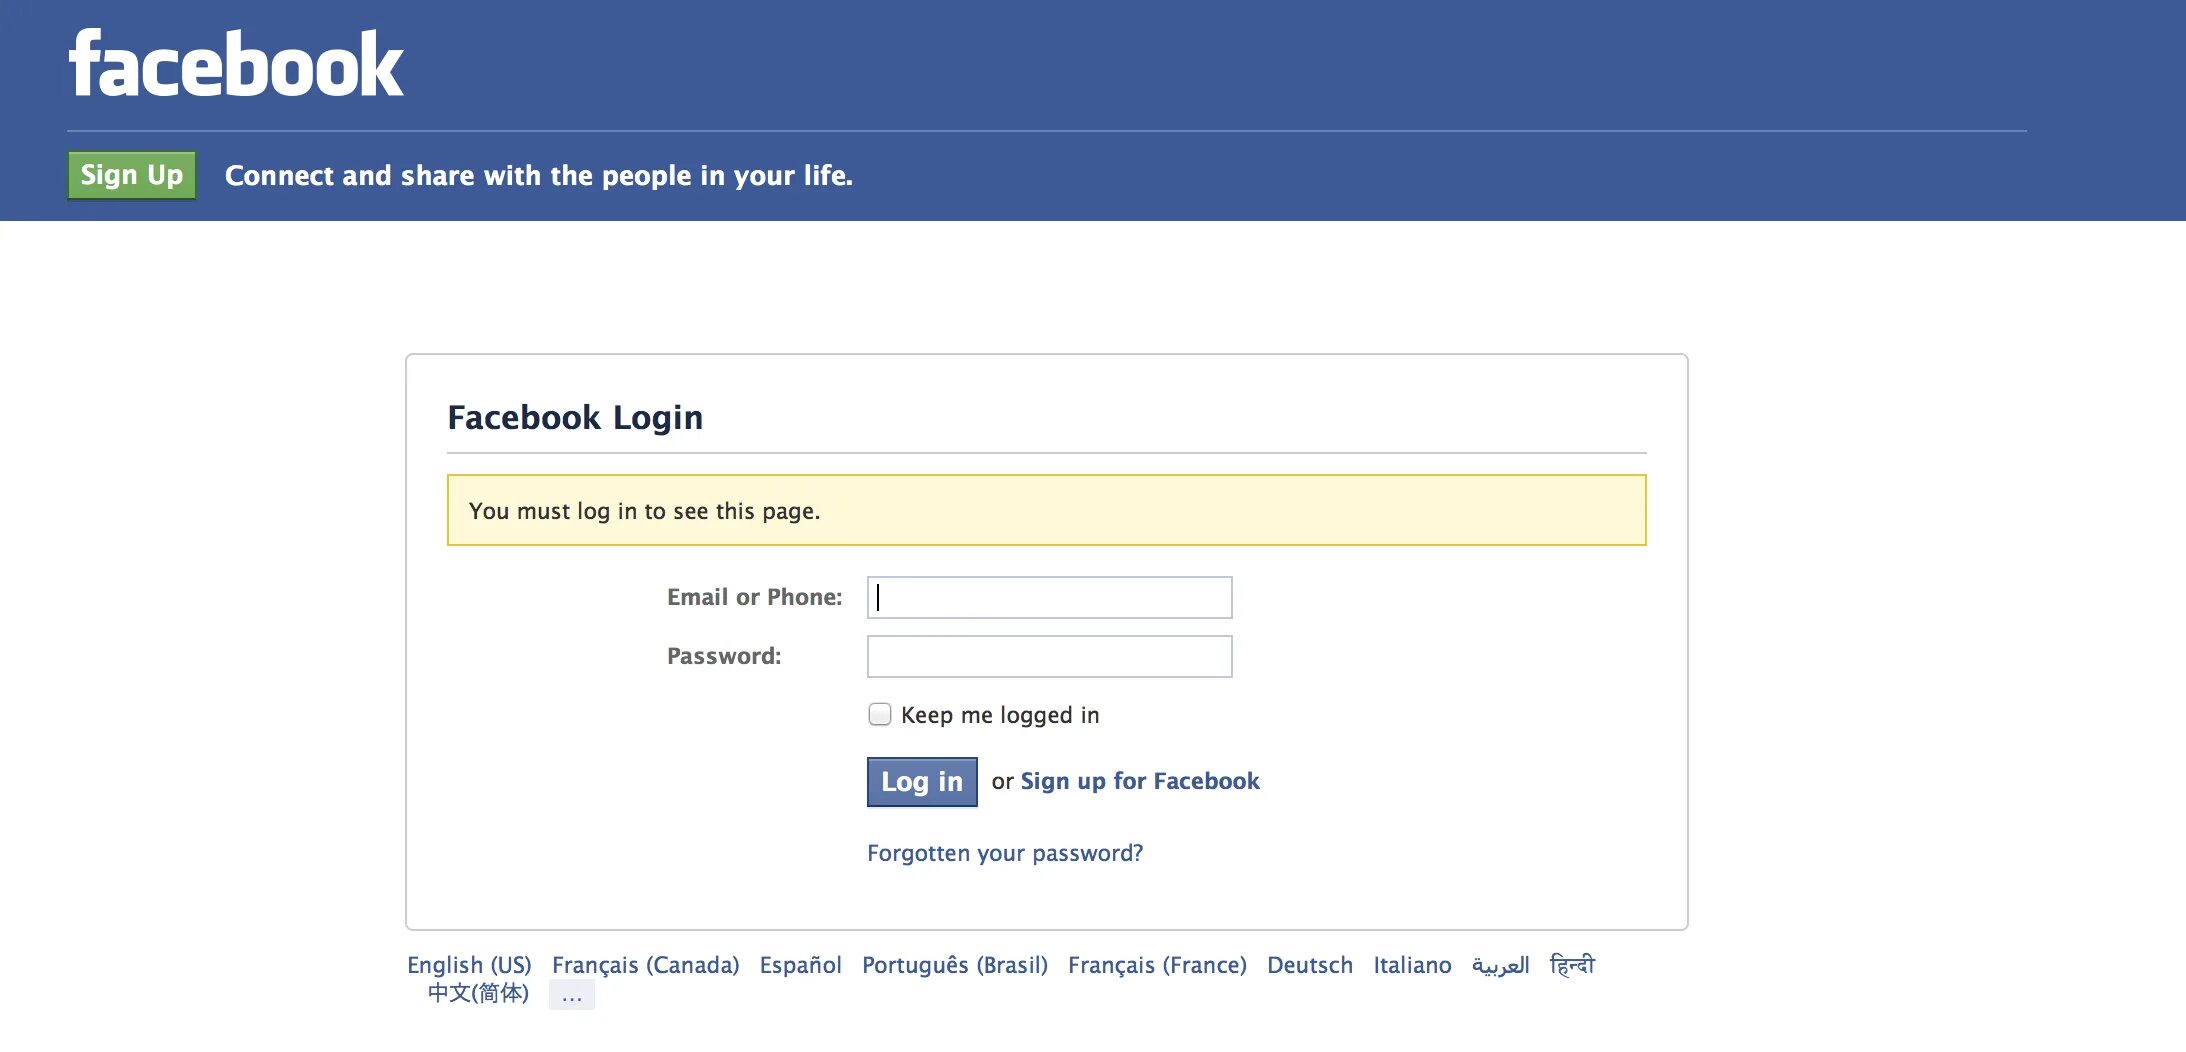 Www.Facebook.com login. Facebook account. Facebook.com Facebook.com. Facebook вход. Https login com login srf